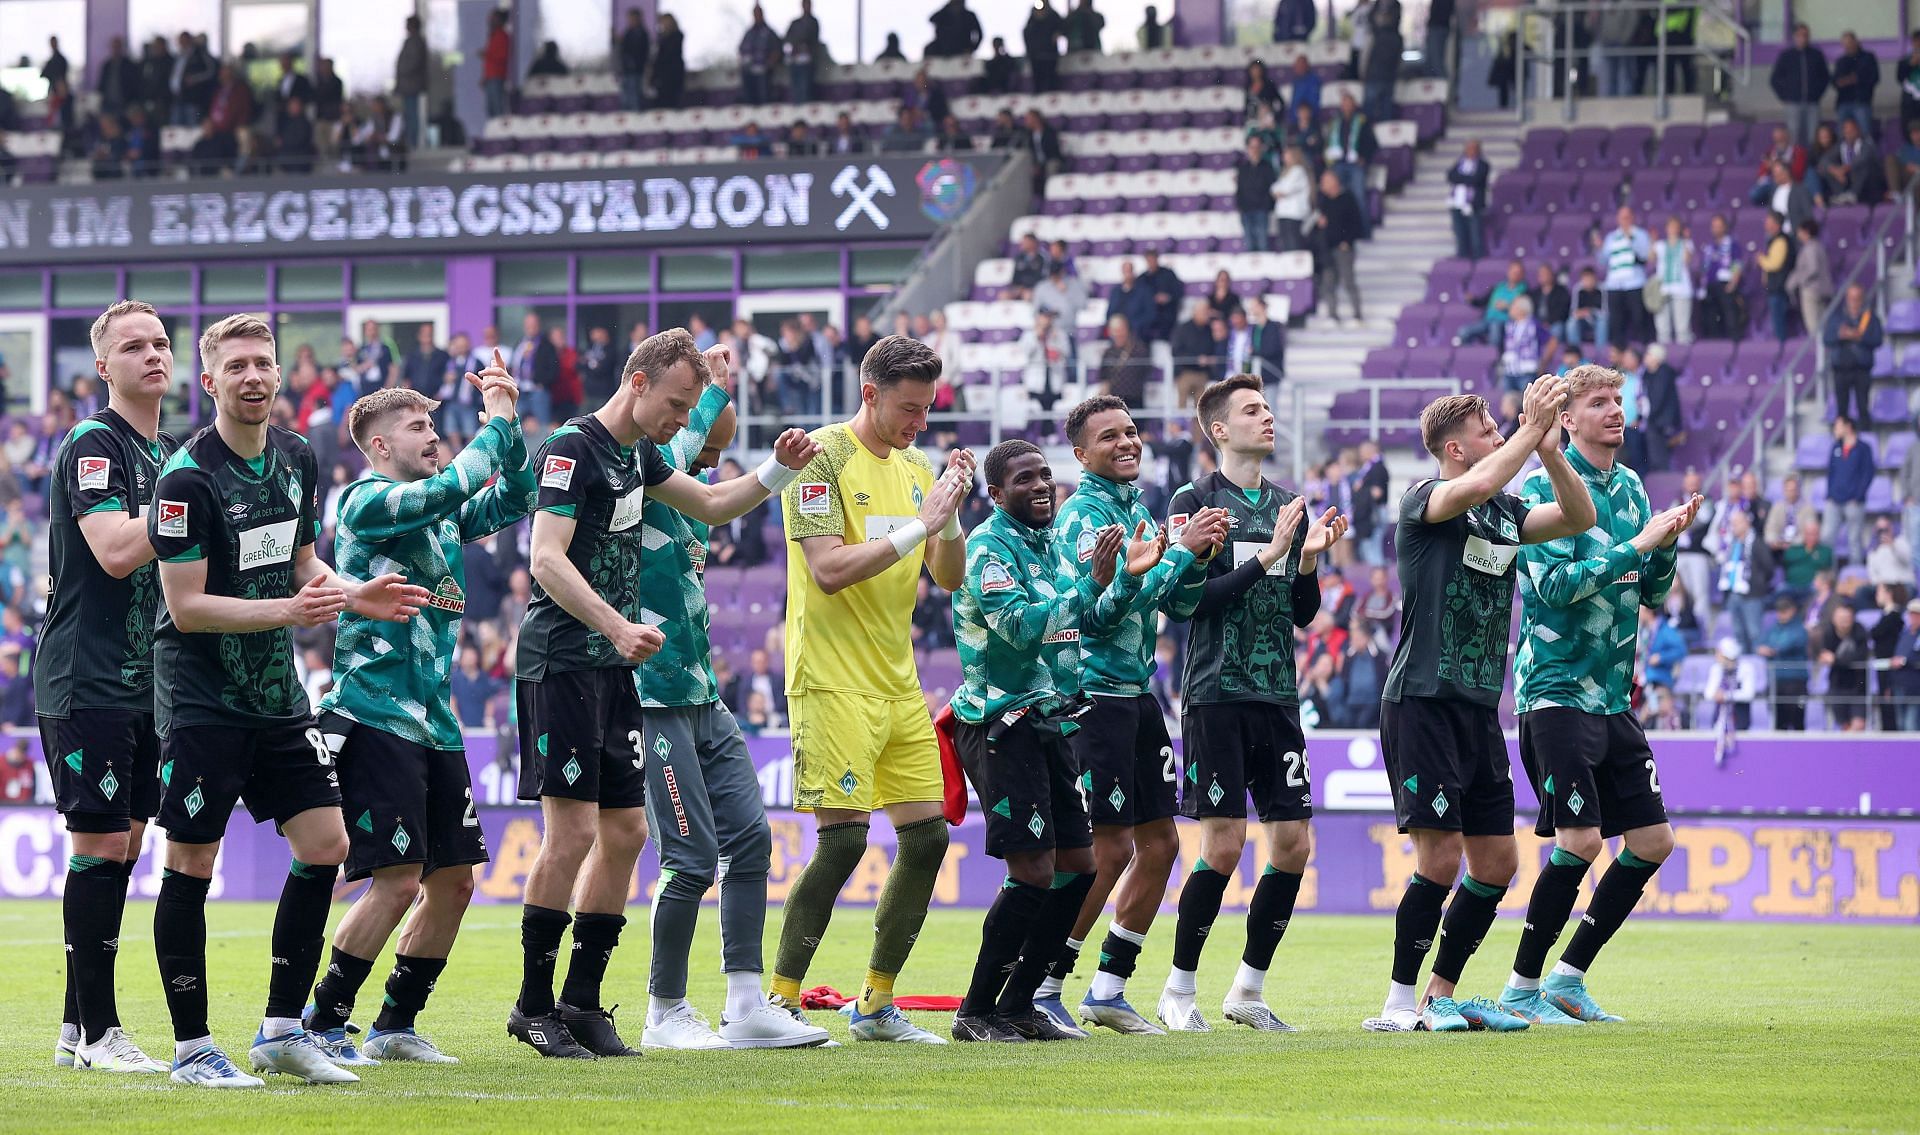 Werder Bremen vs Jahn Regensburg preview - 2. Bundesliga